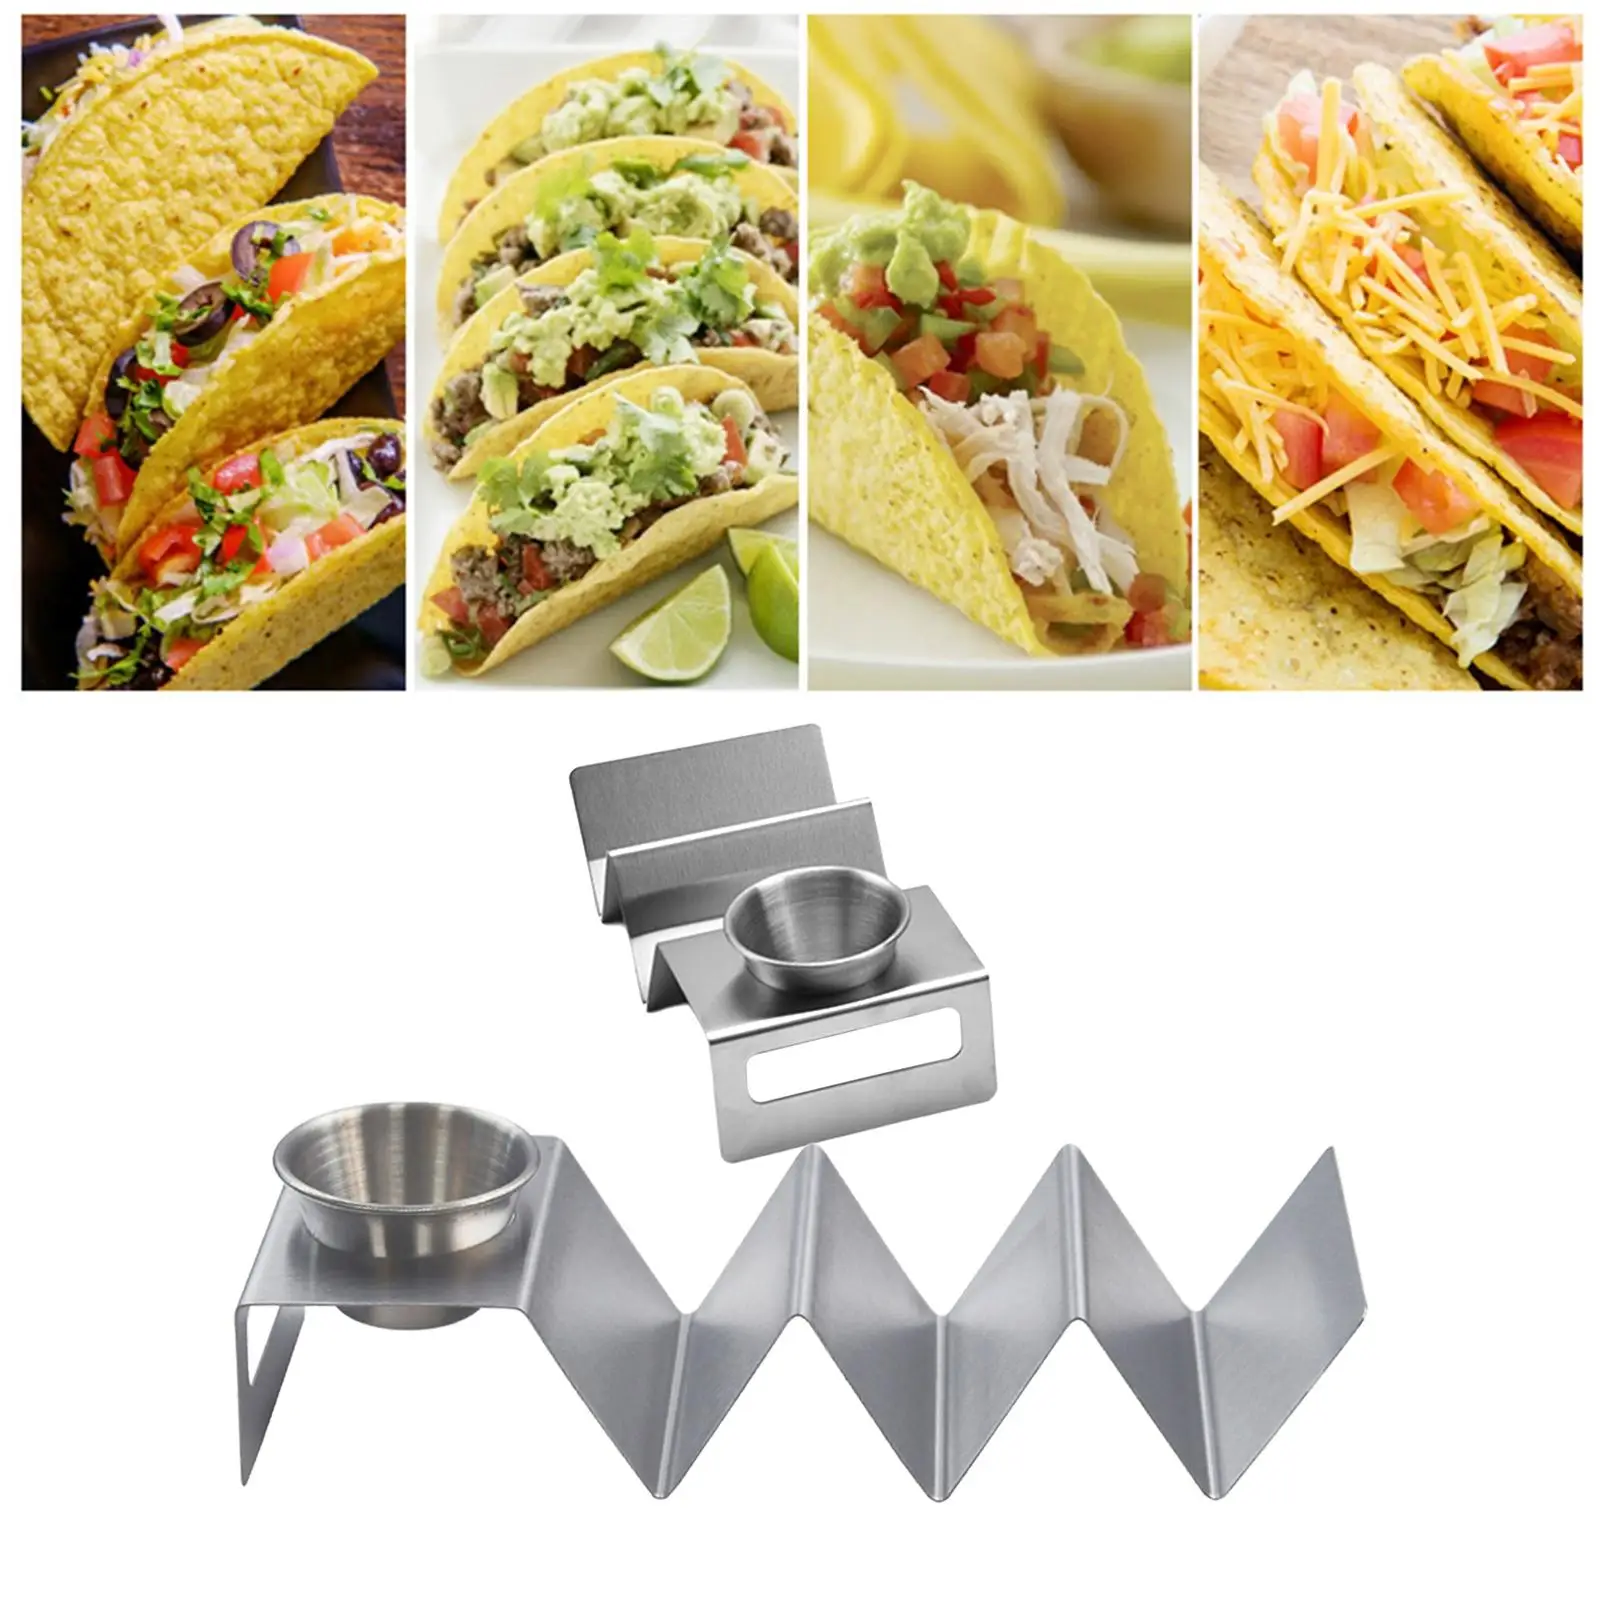 Stainless Steel  Tray Holder Server  Shape Hot Dog Holder  Rack  for Picnic, Party, Festivals Pancakes Tortillas Oven Grill